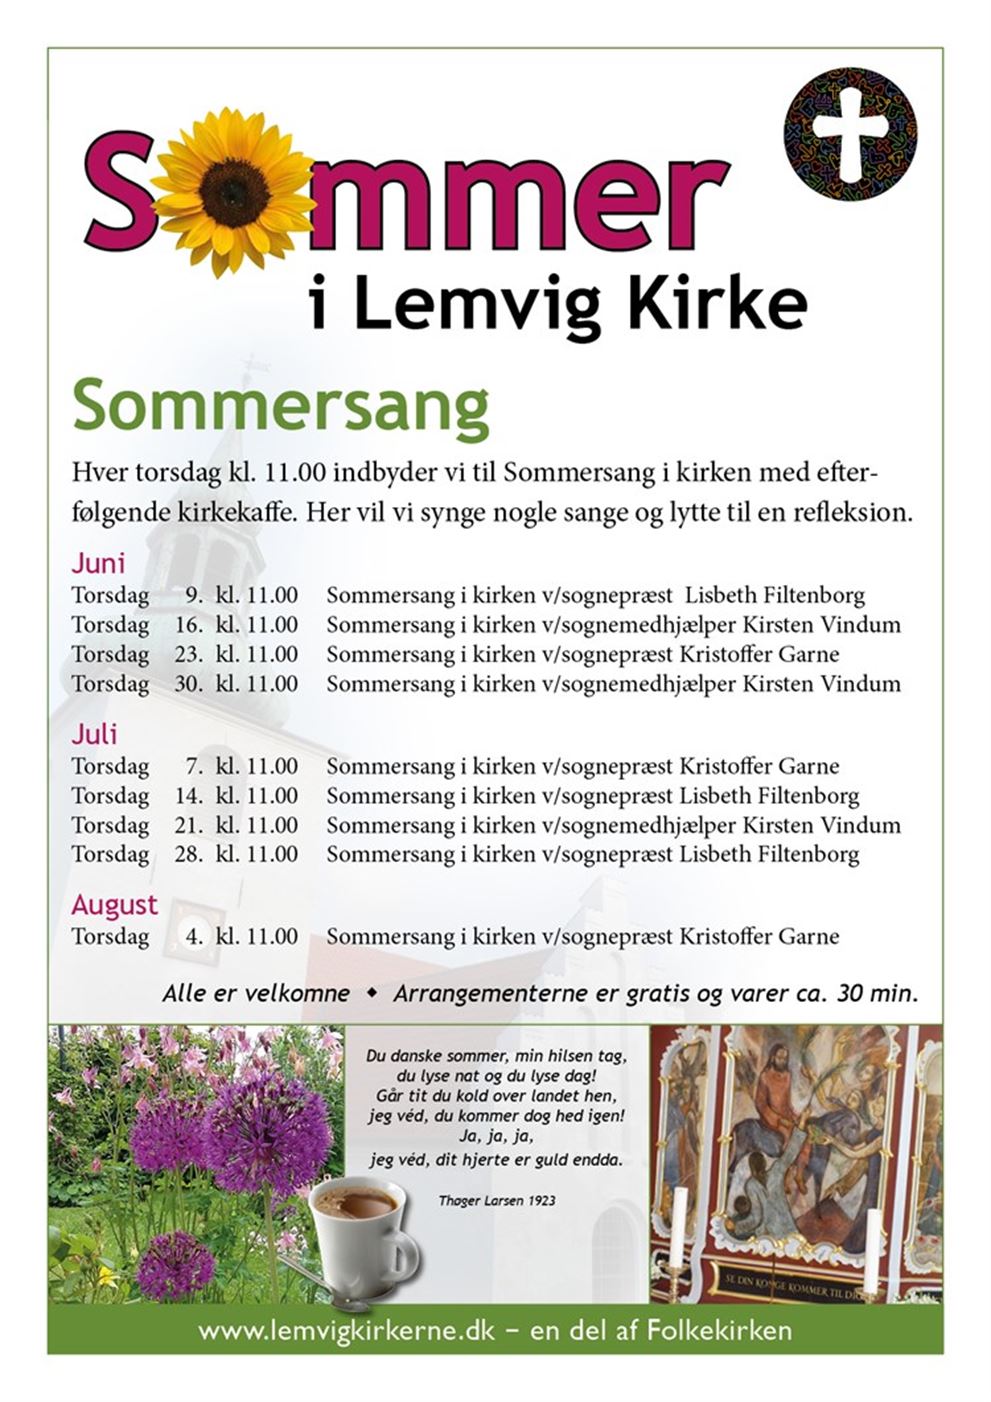 Sommersang Lemvig Kirke (4 august)